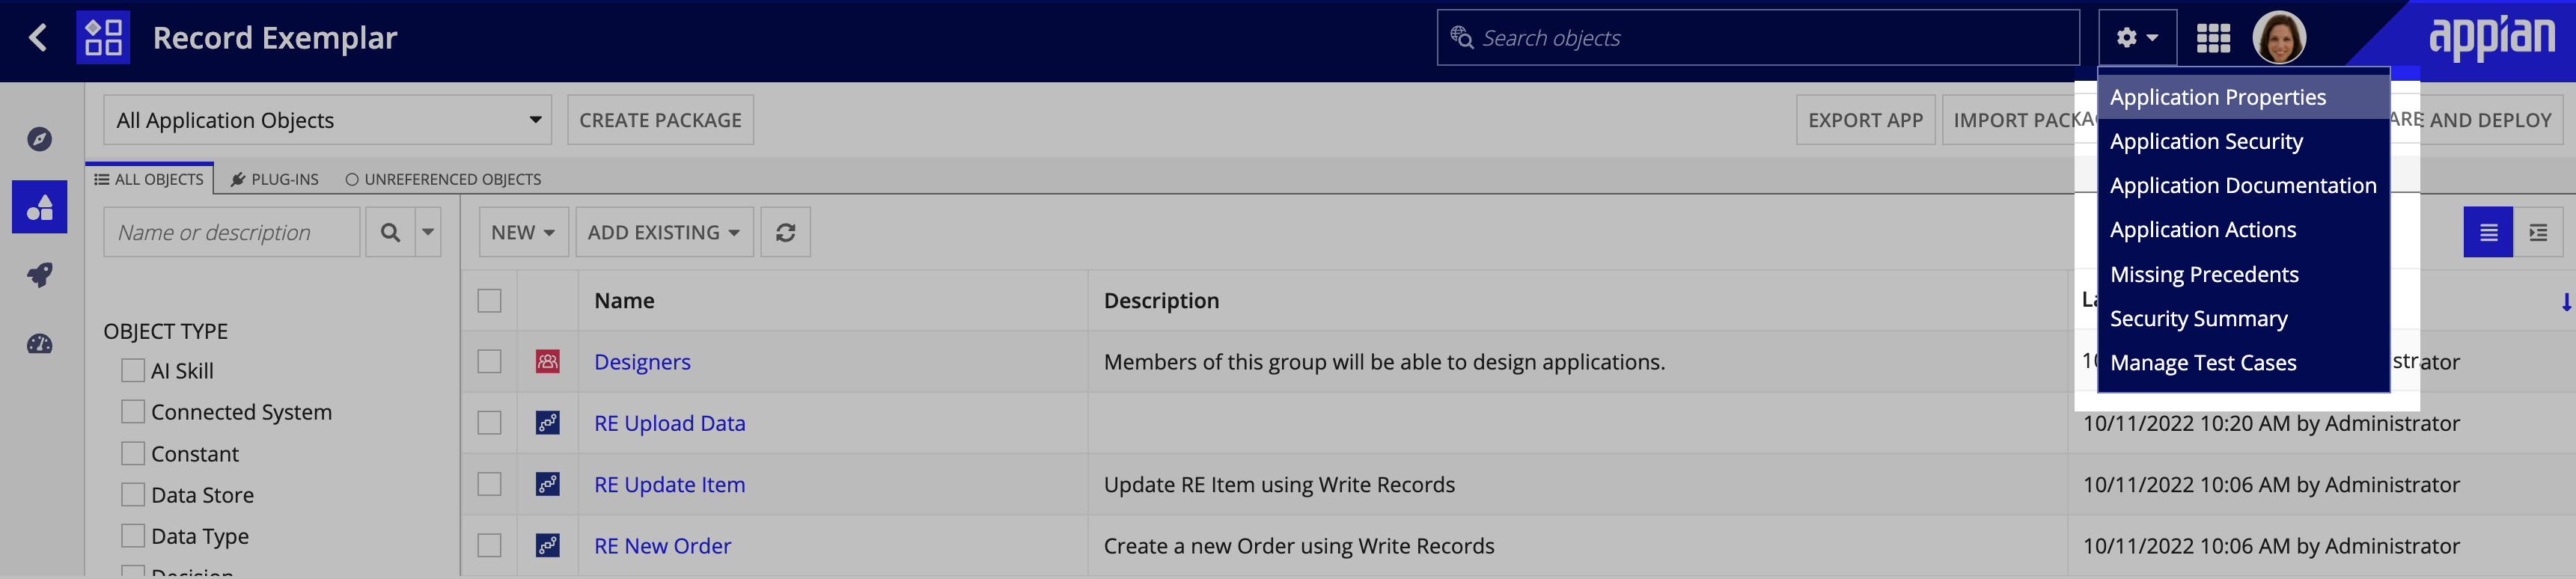 screenshot of the settings menu in the application header bar